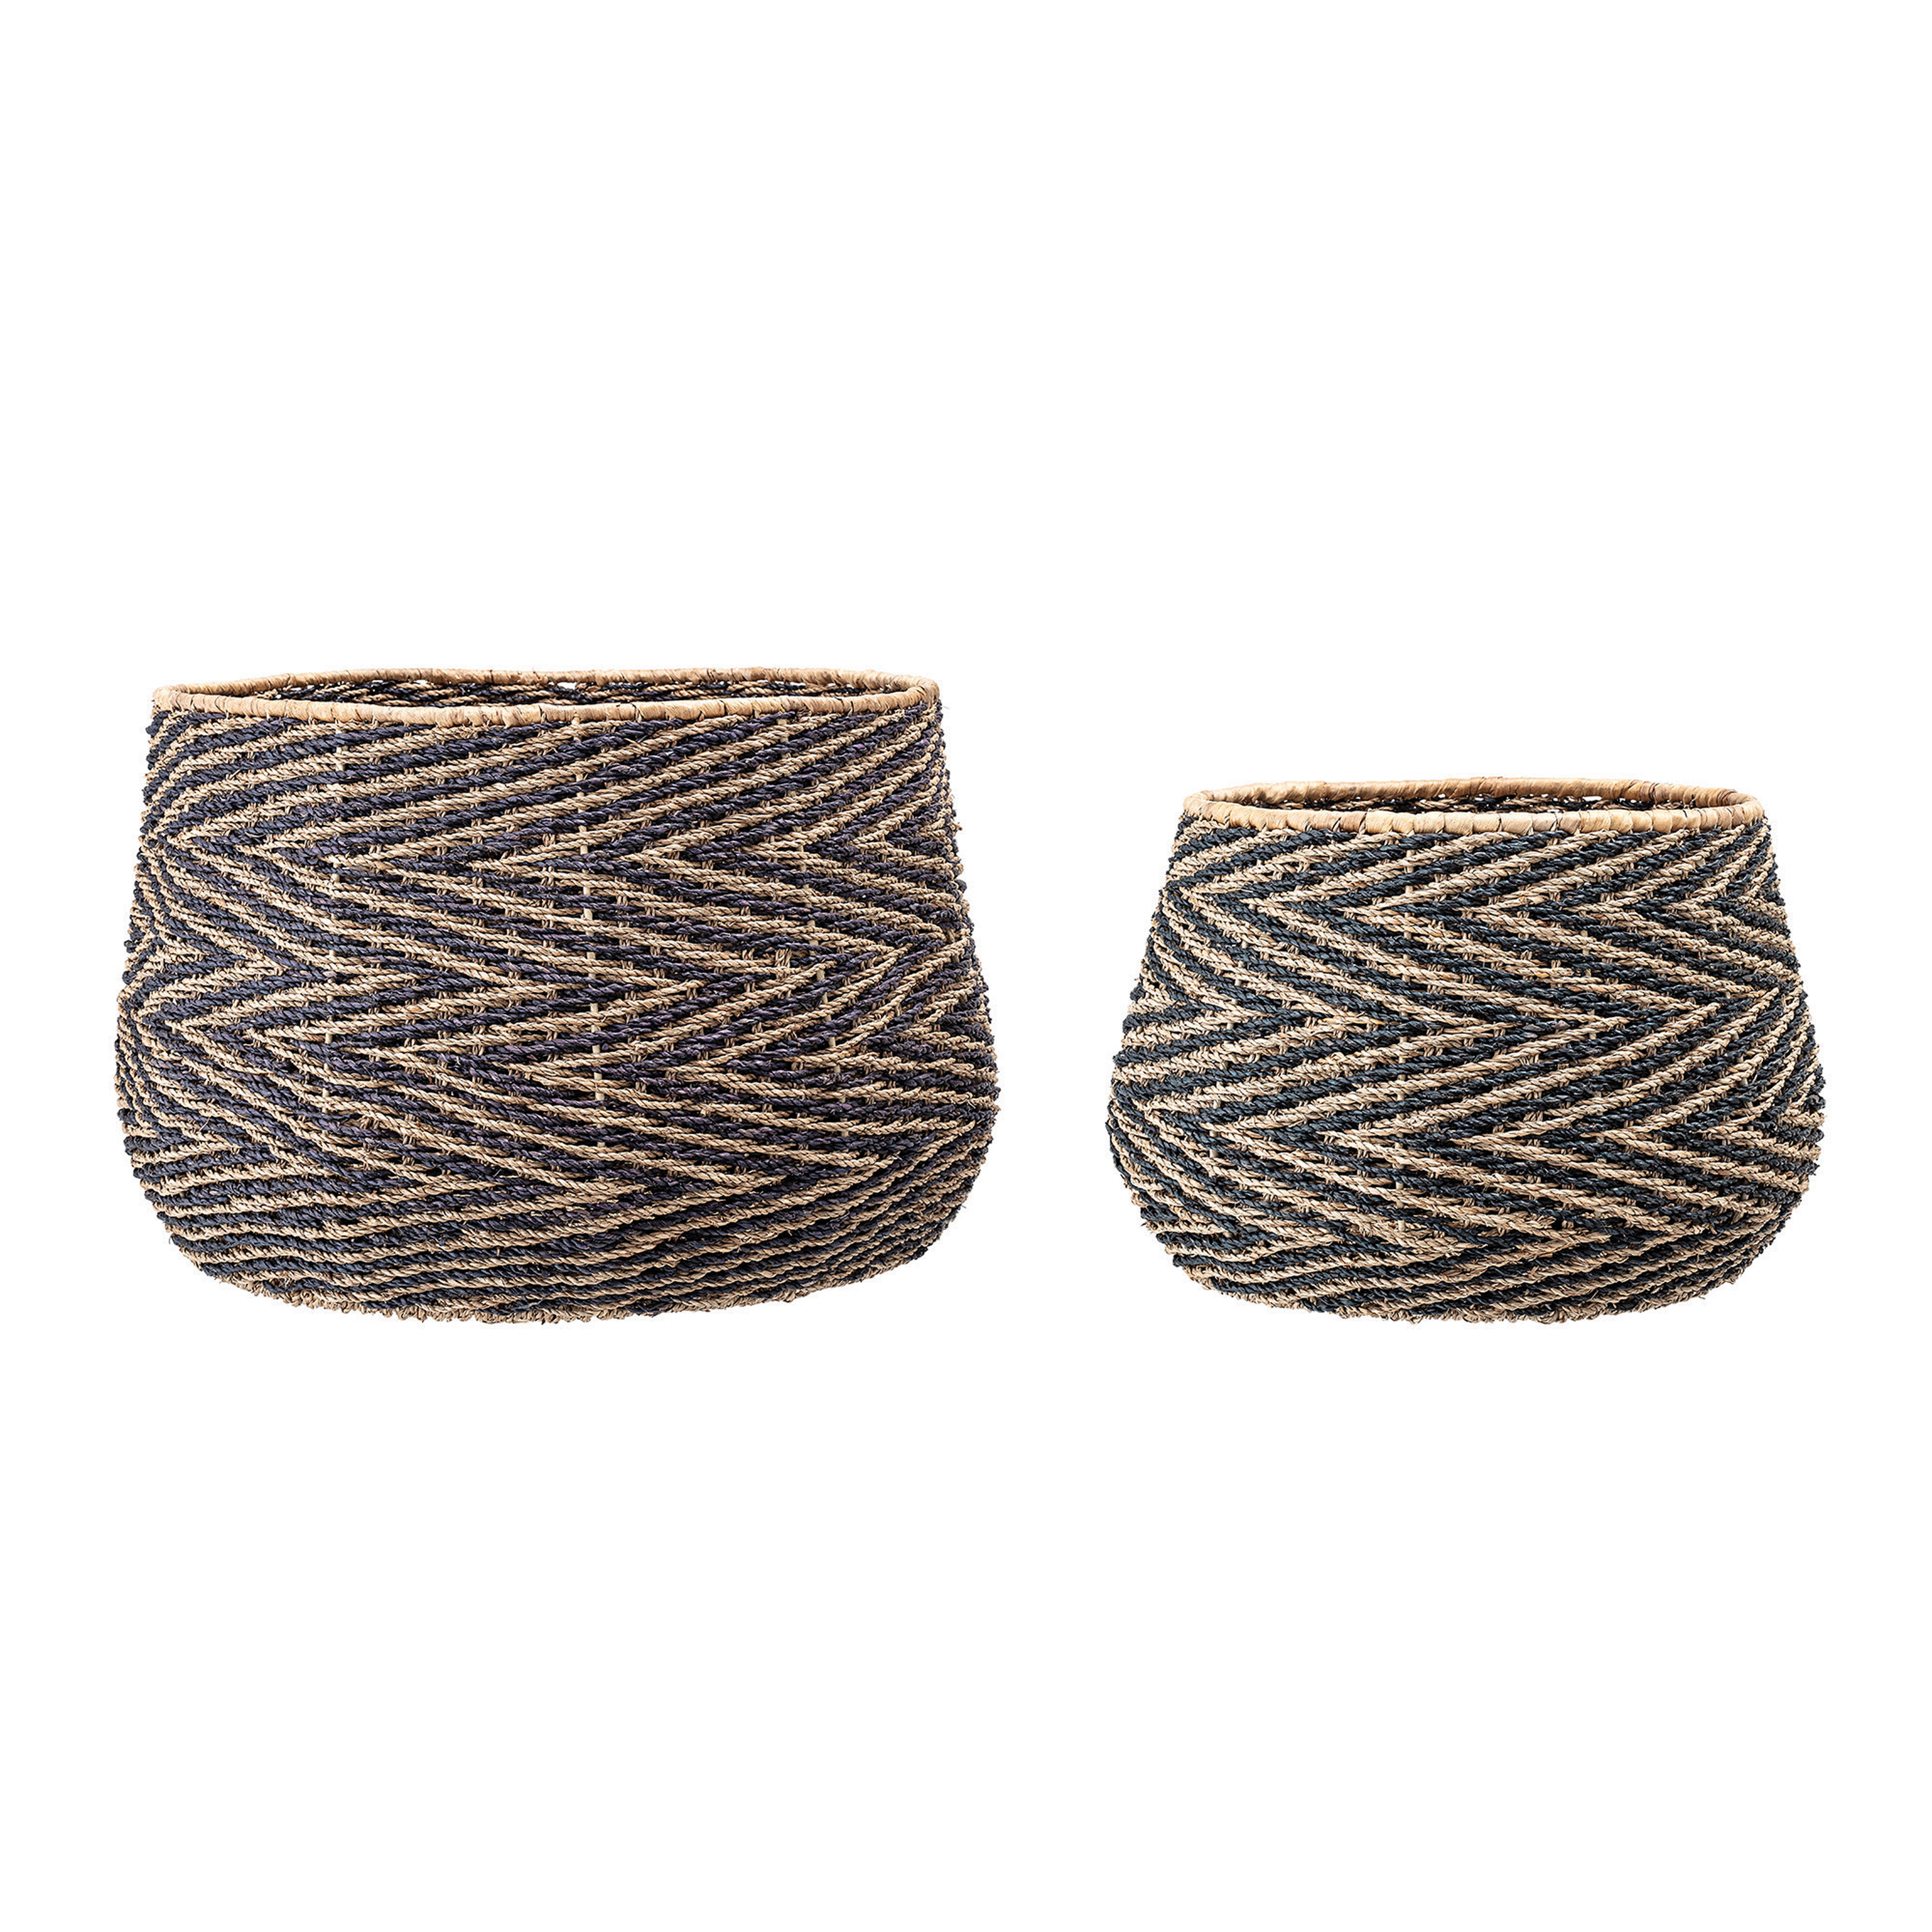 Handwoven Chevron Seagrass Baskets, Black & Natural, Set of 2 - Moss & Wilder